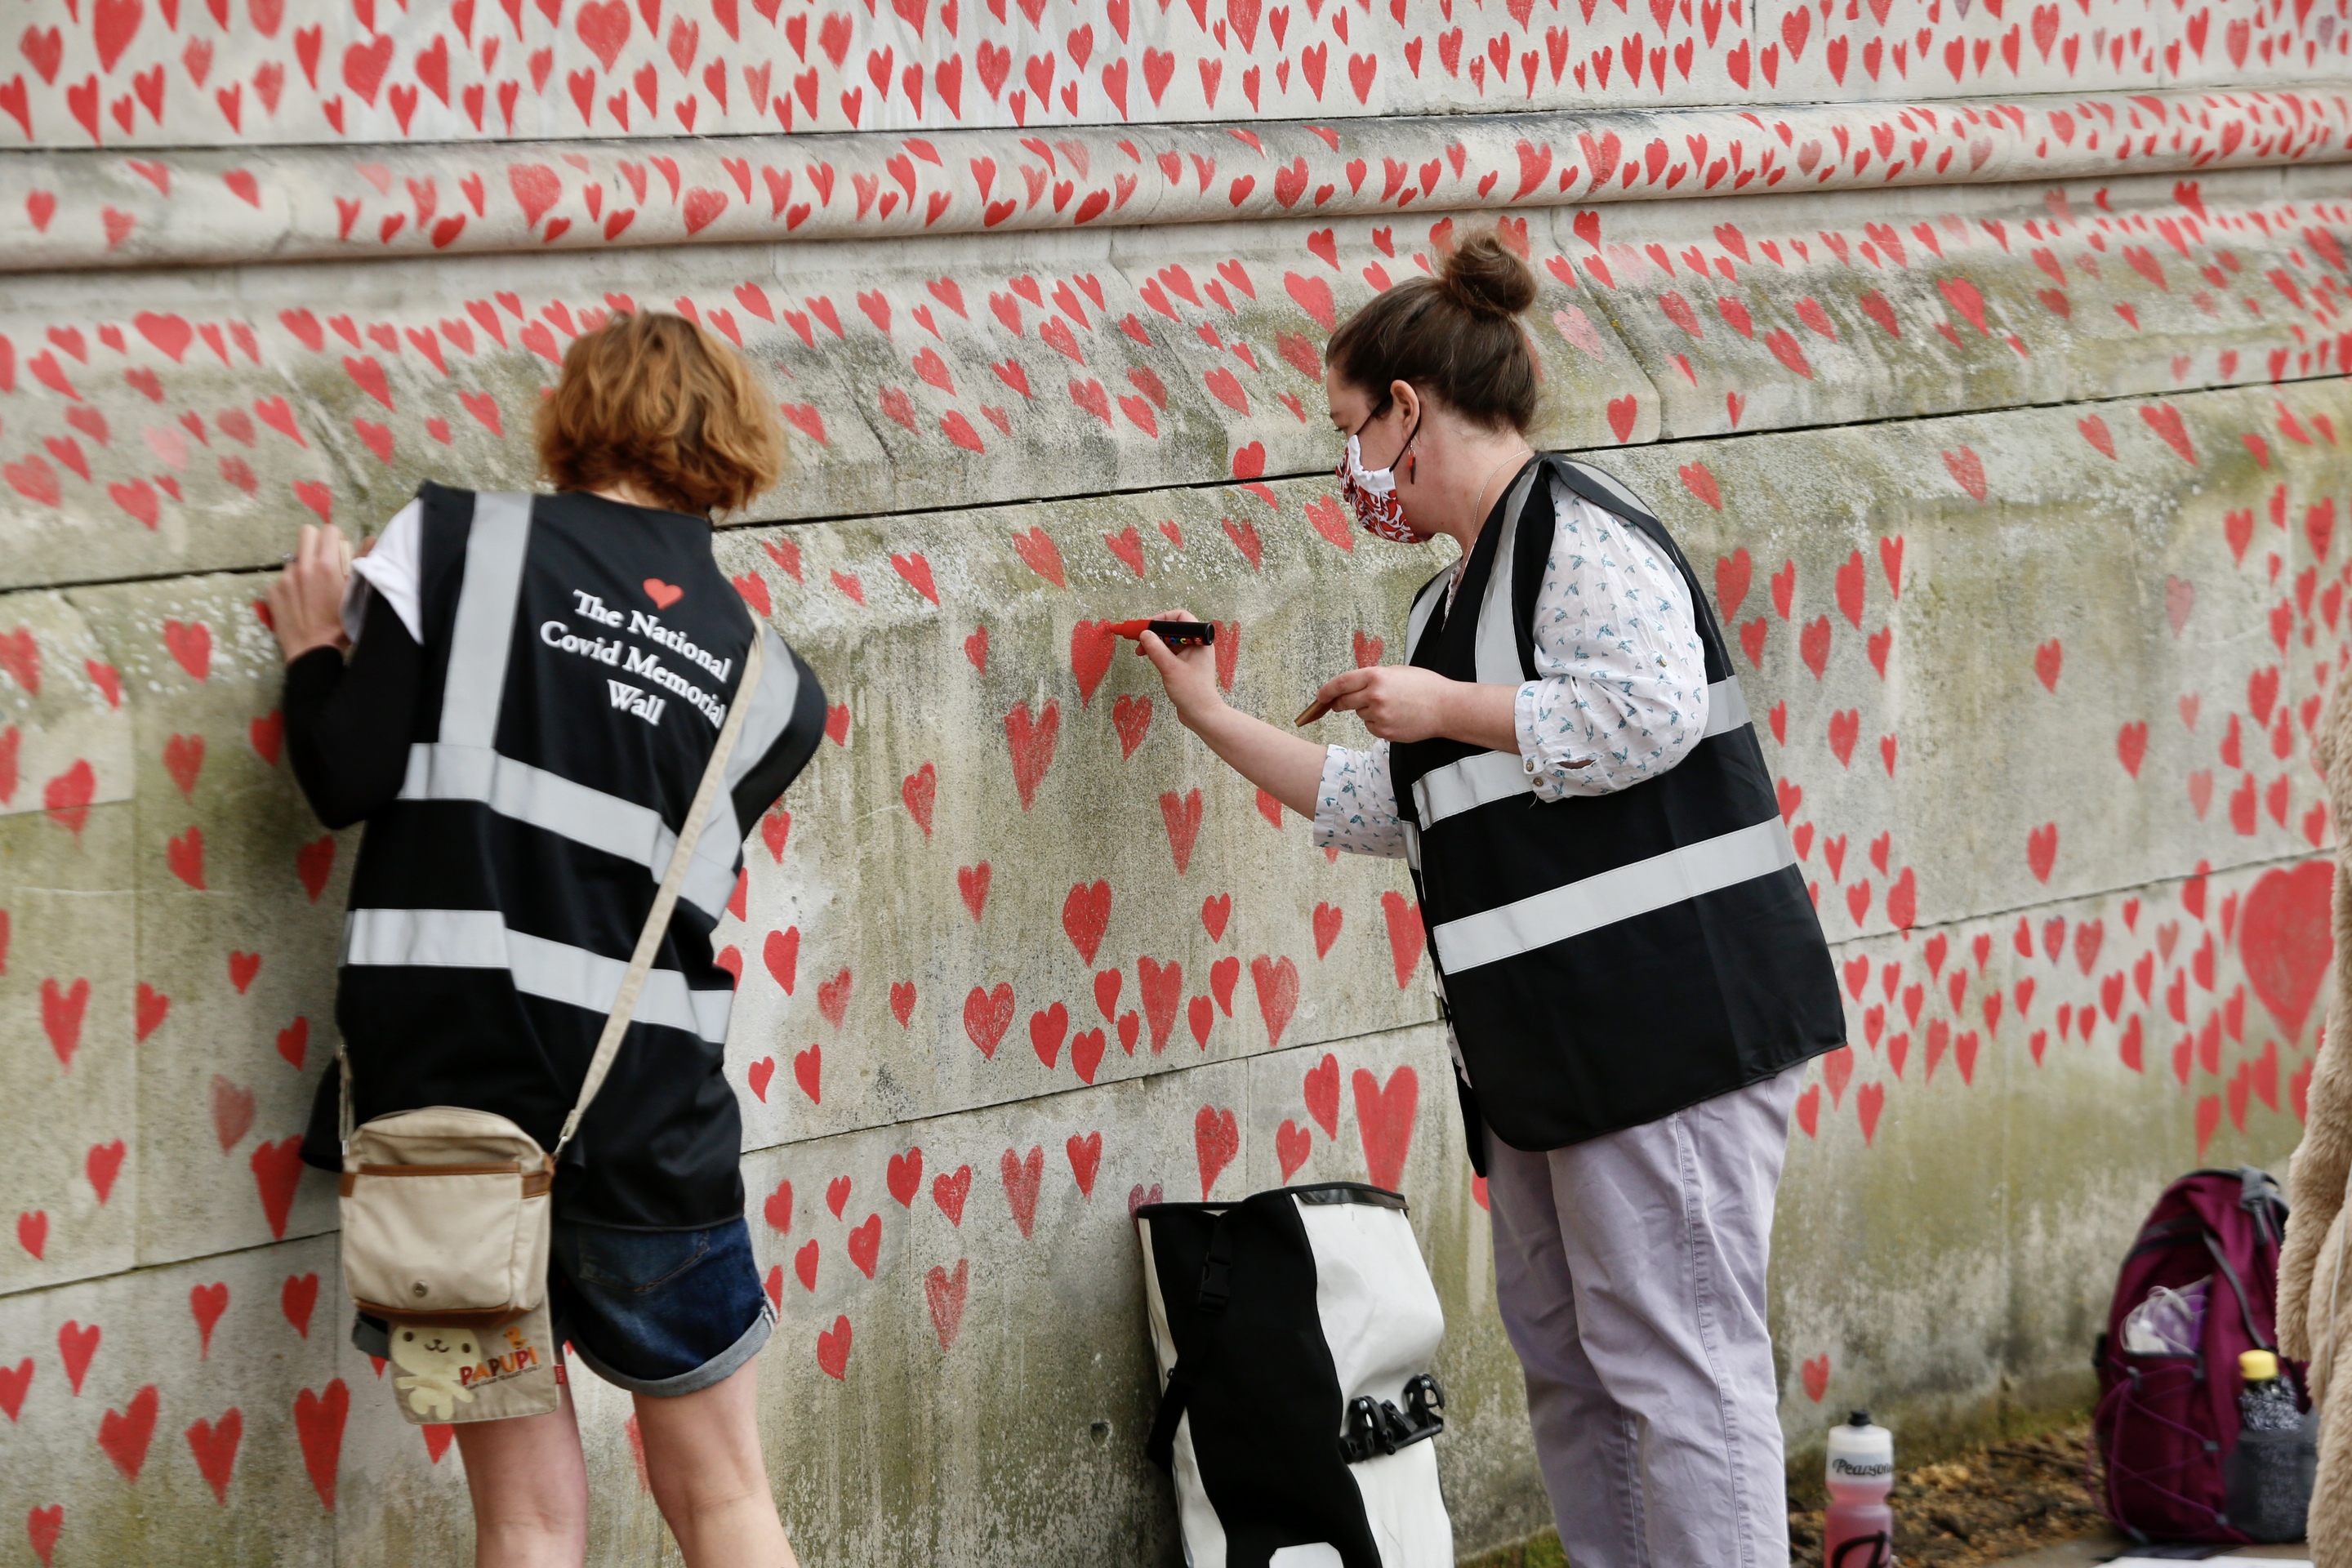 National Covid Memorial Wall in London honors pandemic victims